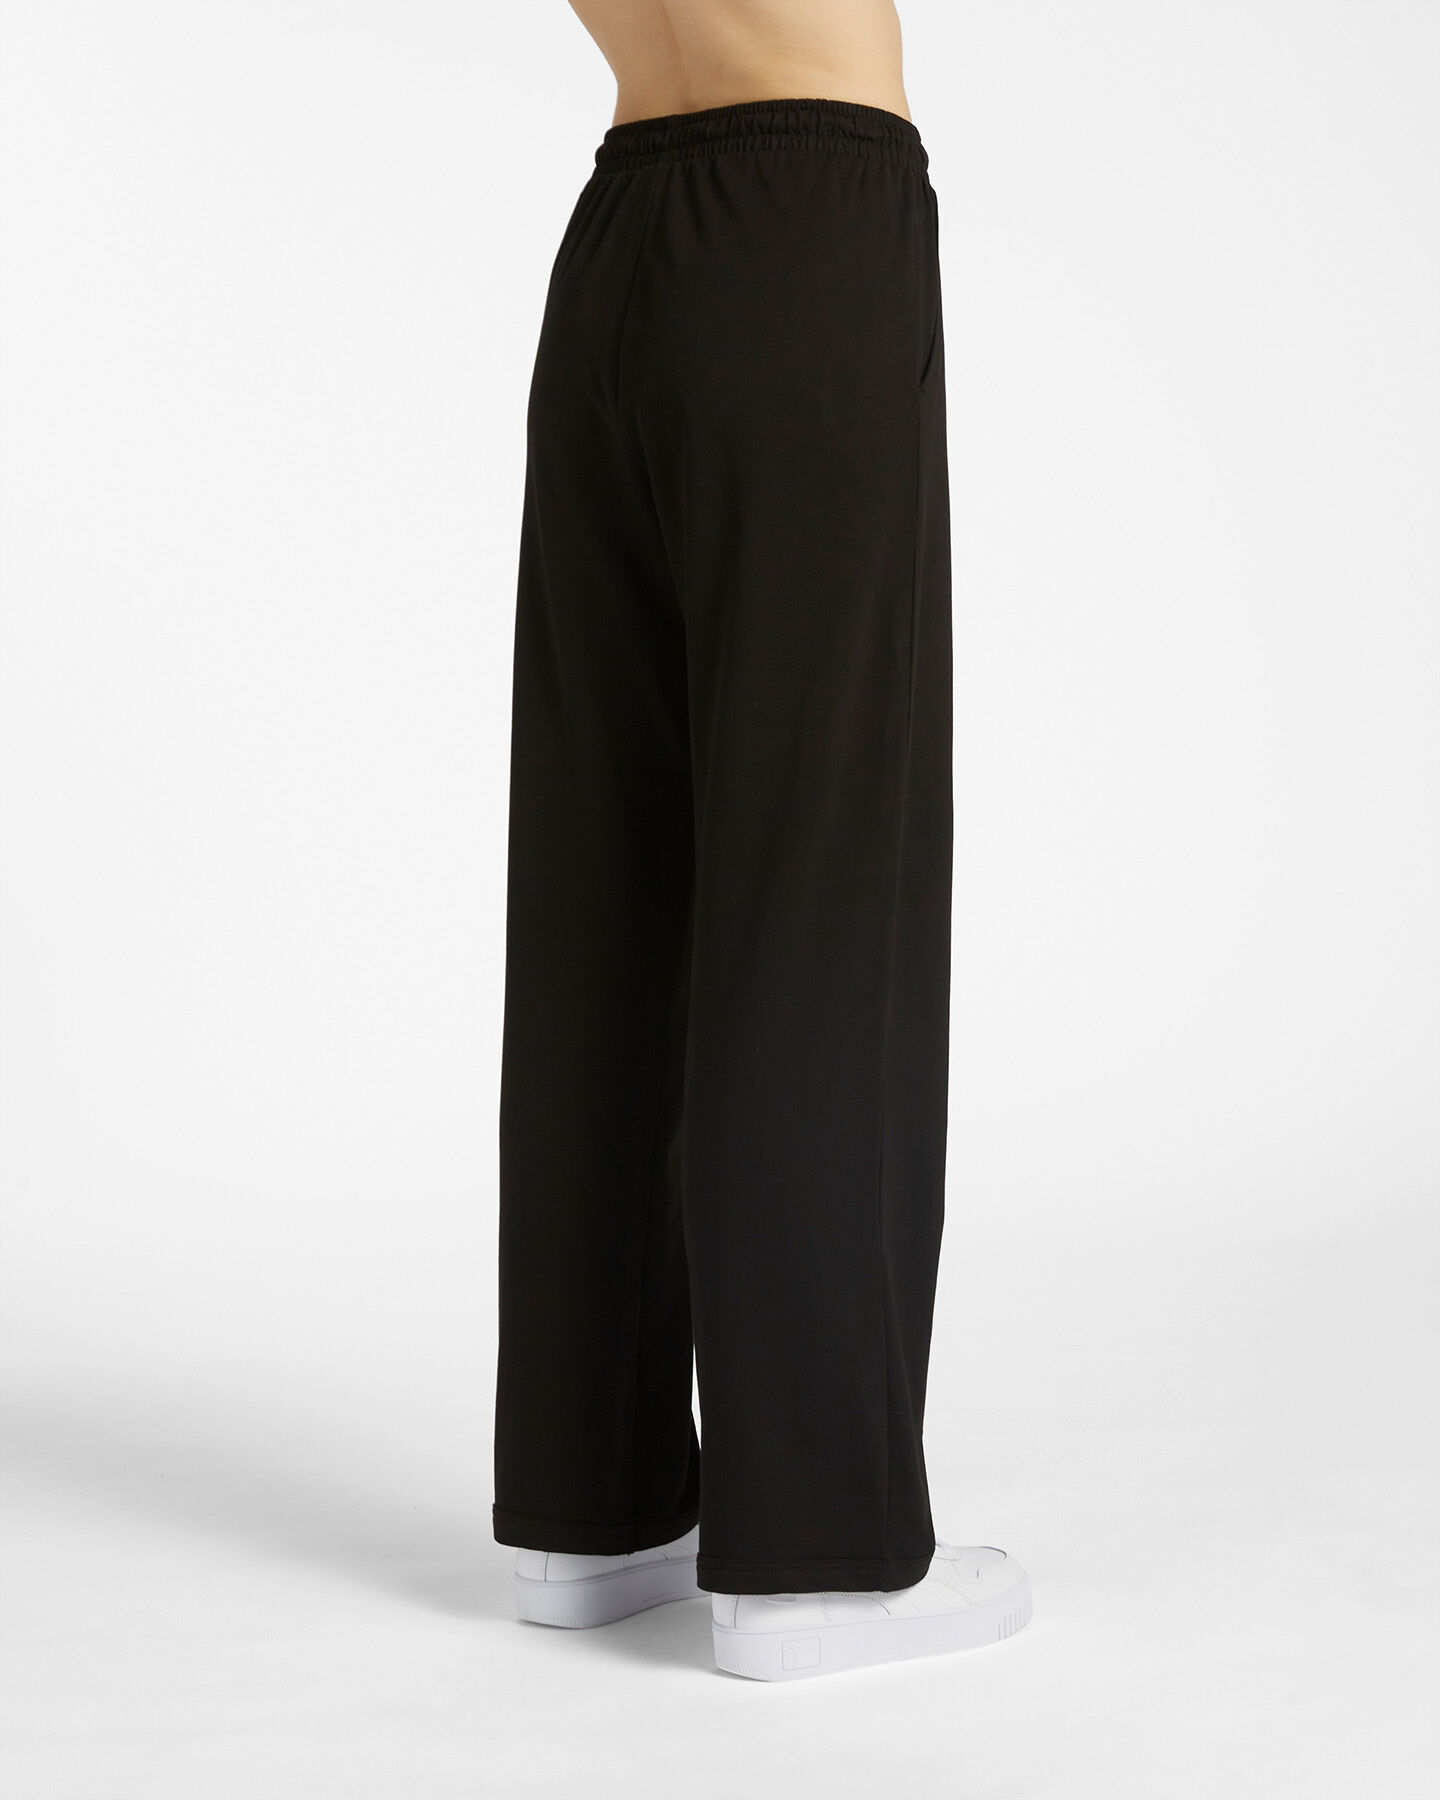  Pantalone ELLESSE BASIC W S4119969|050|XS scatto 1